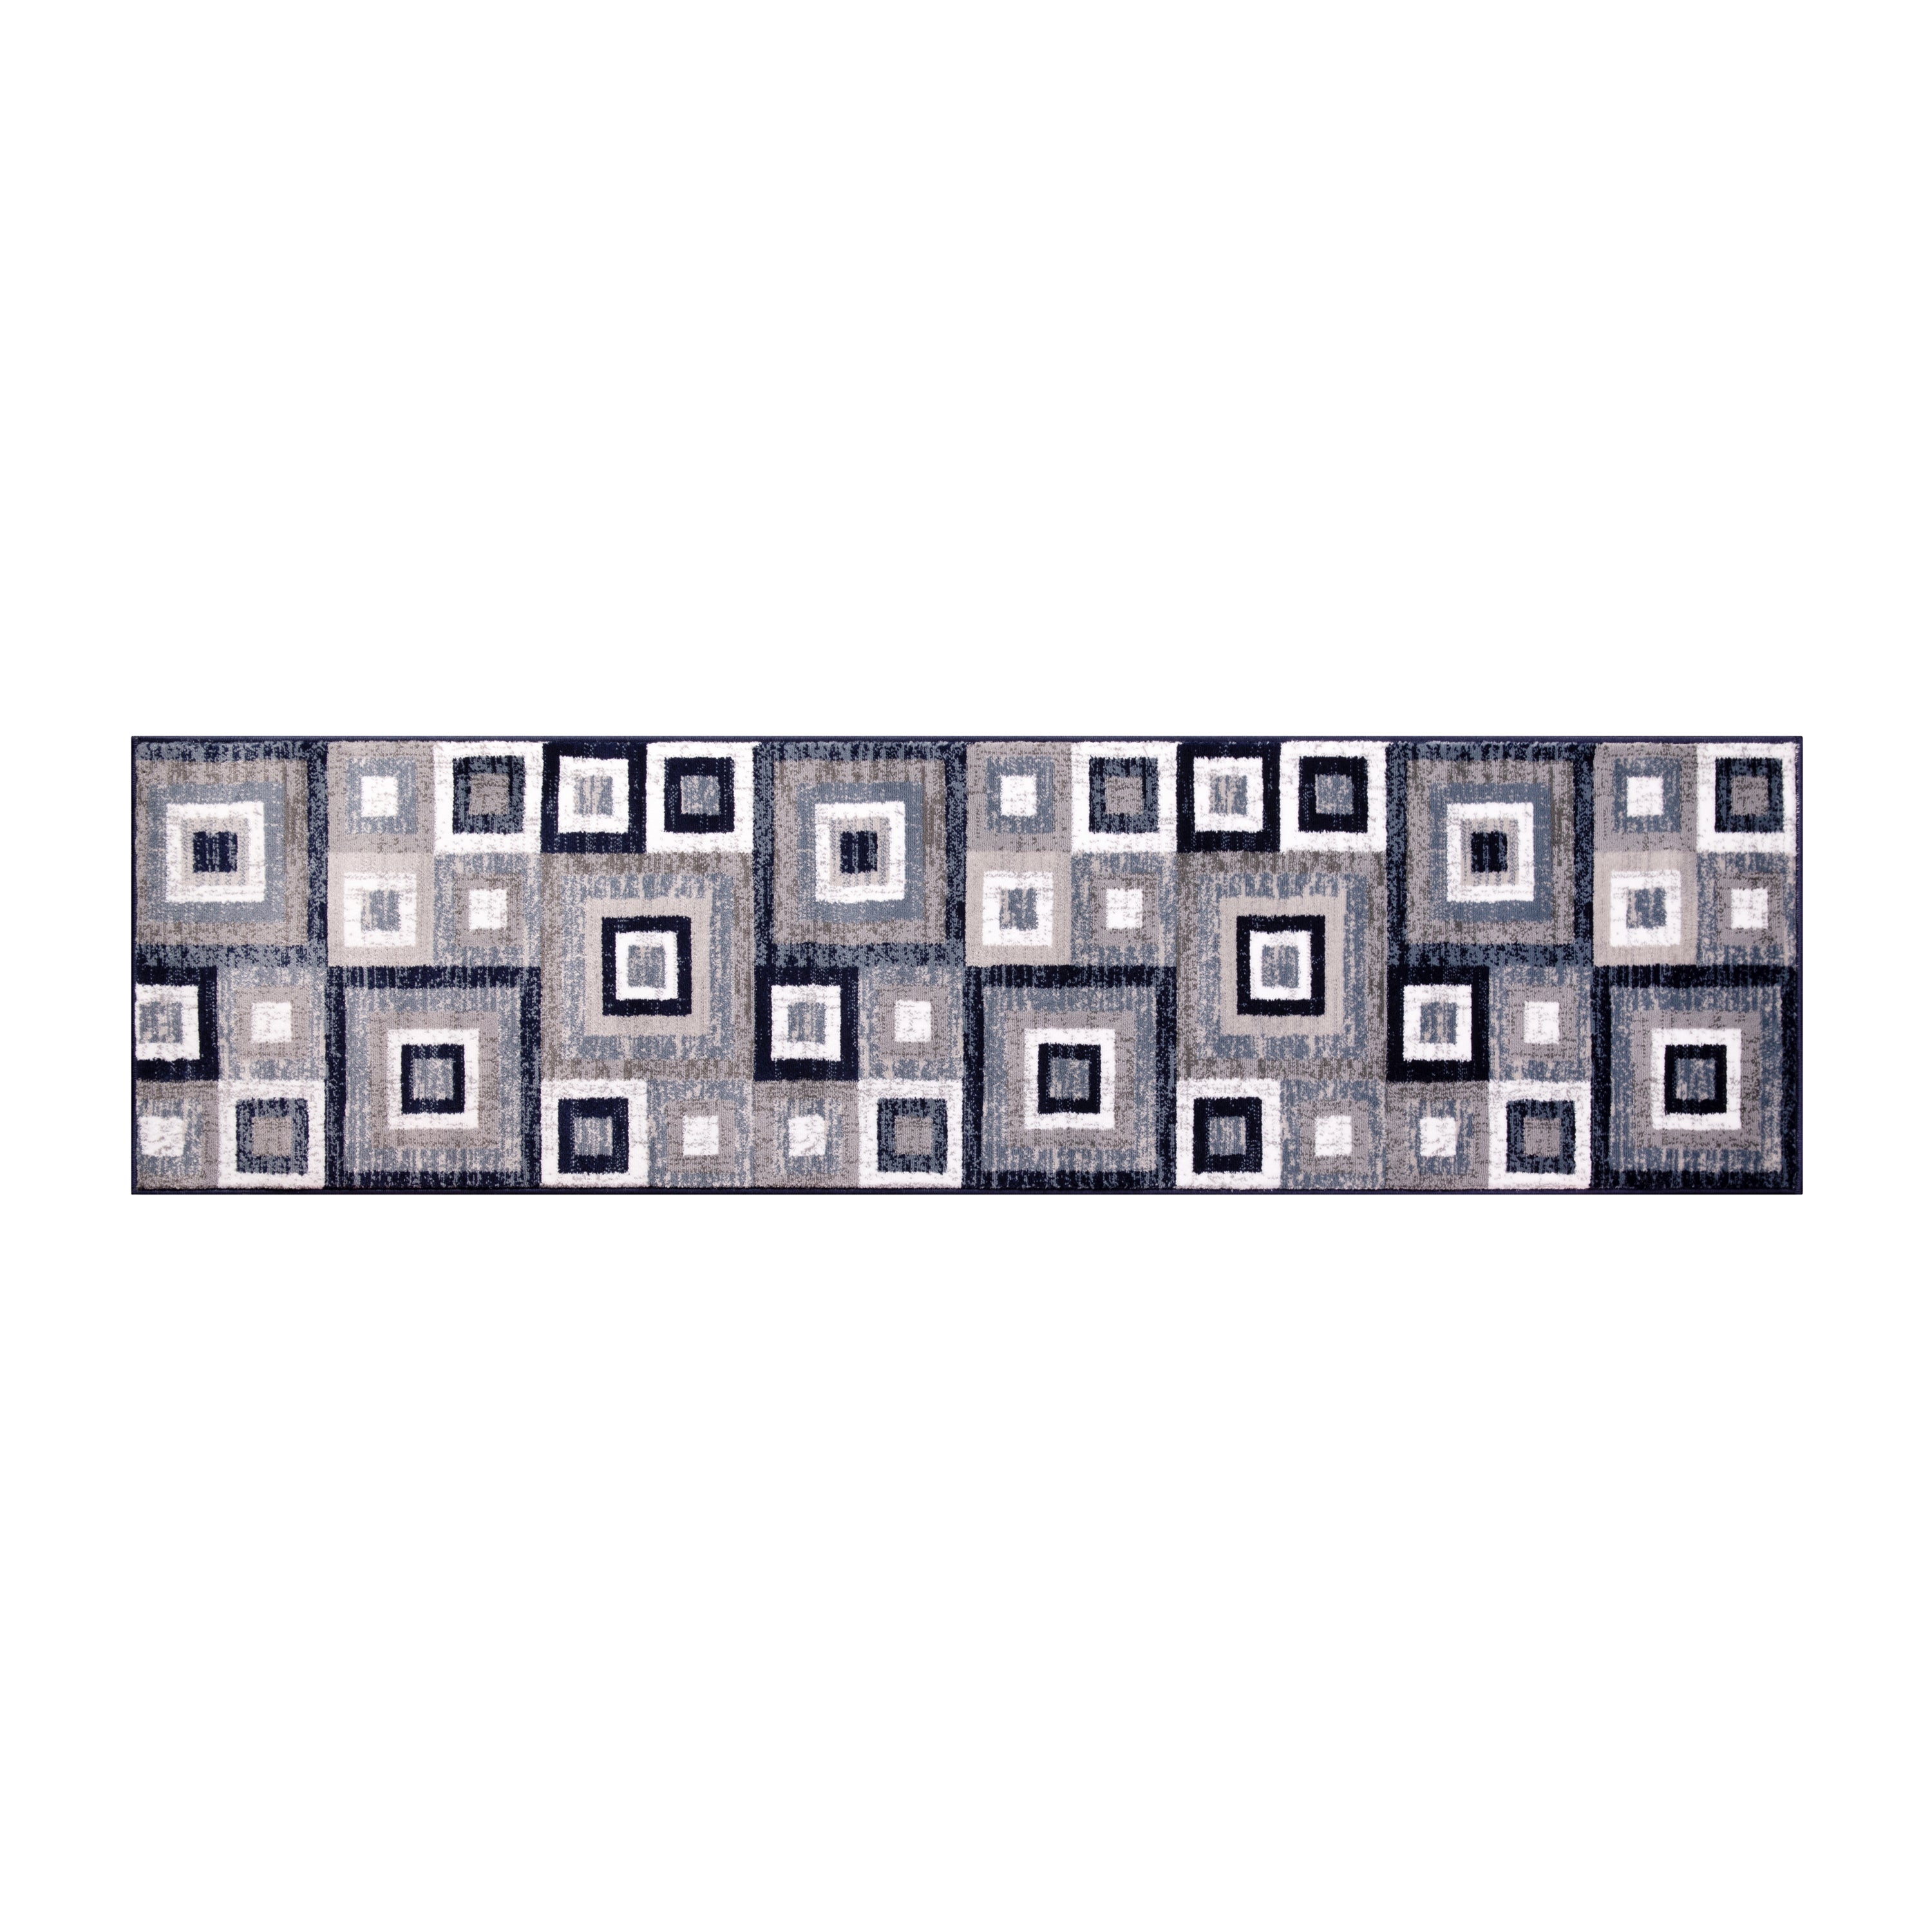 Gideon Collection Geometric Olefin Area Rug with Cotton Backing, Living Room, Bedroom-Indoor Area Rug-Flash Furniture-Wall2Wall Furnishings